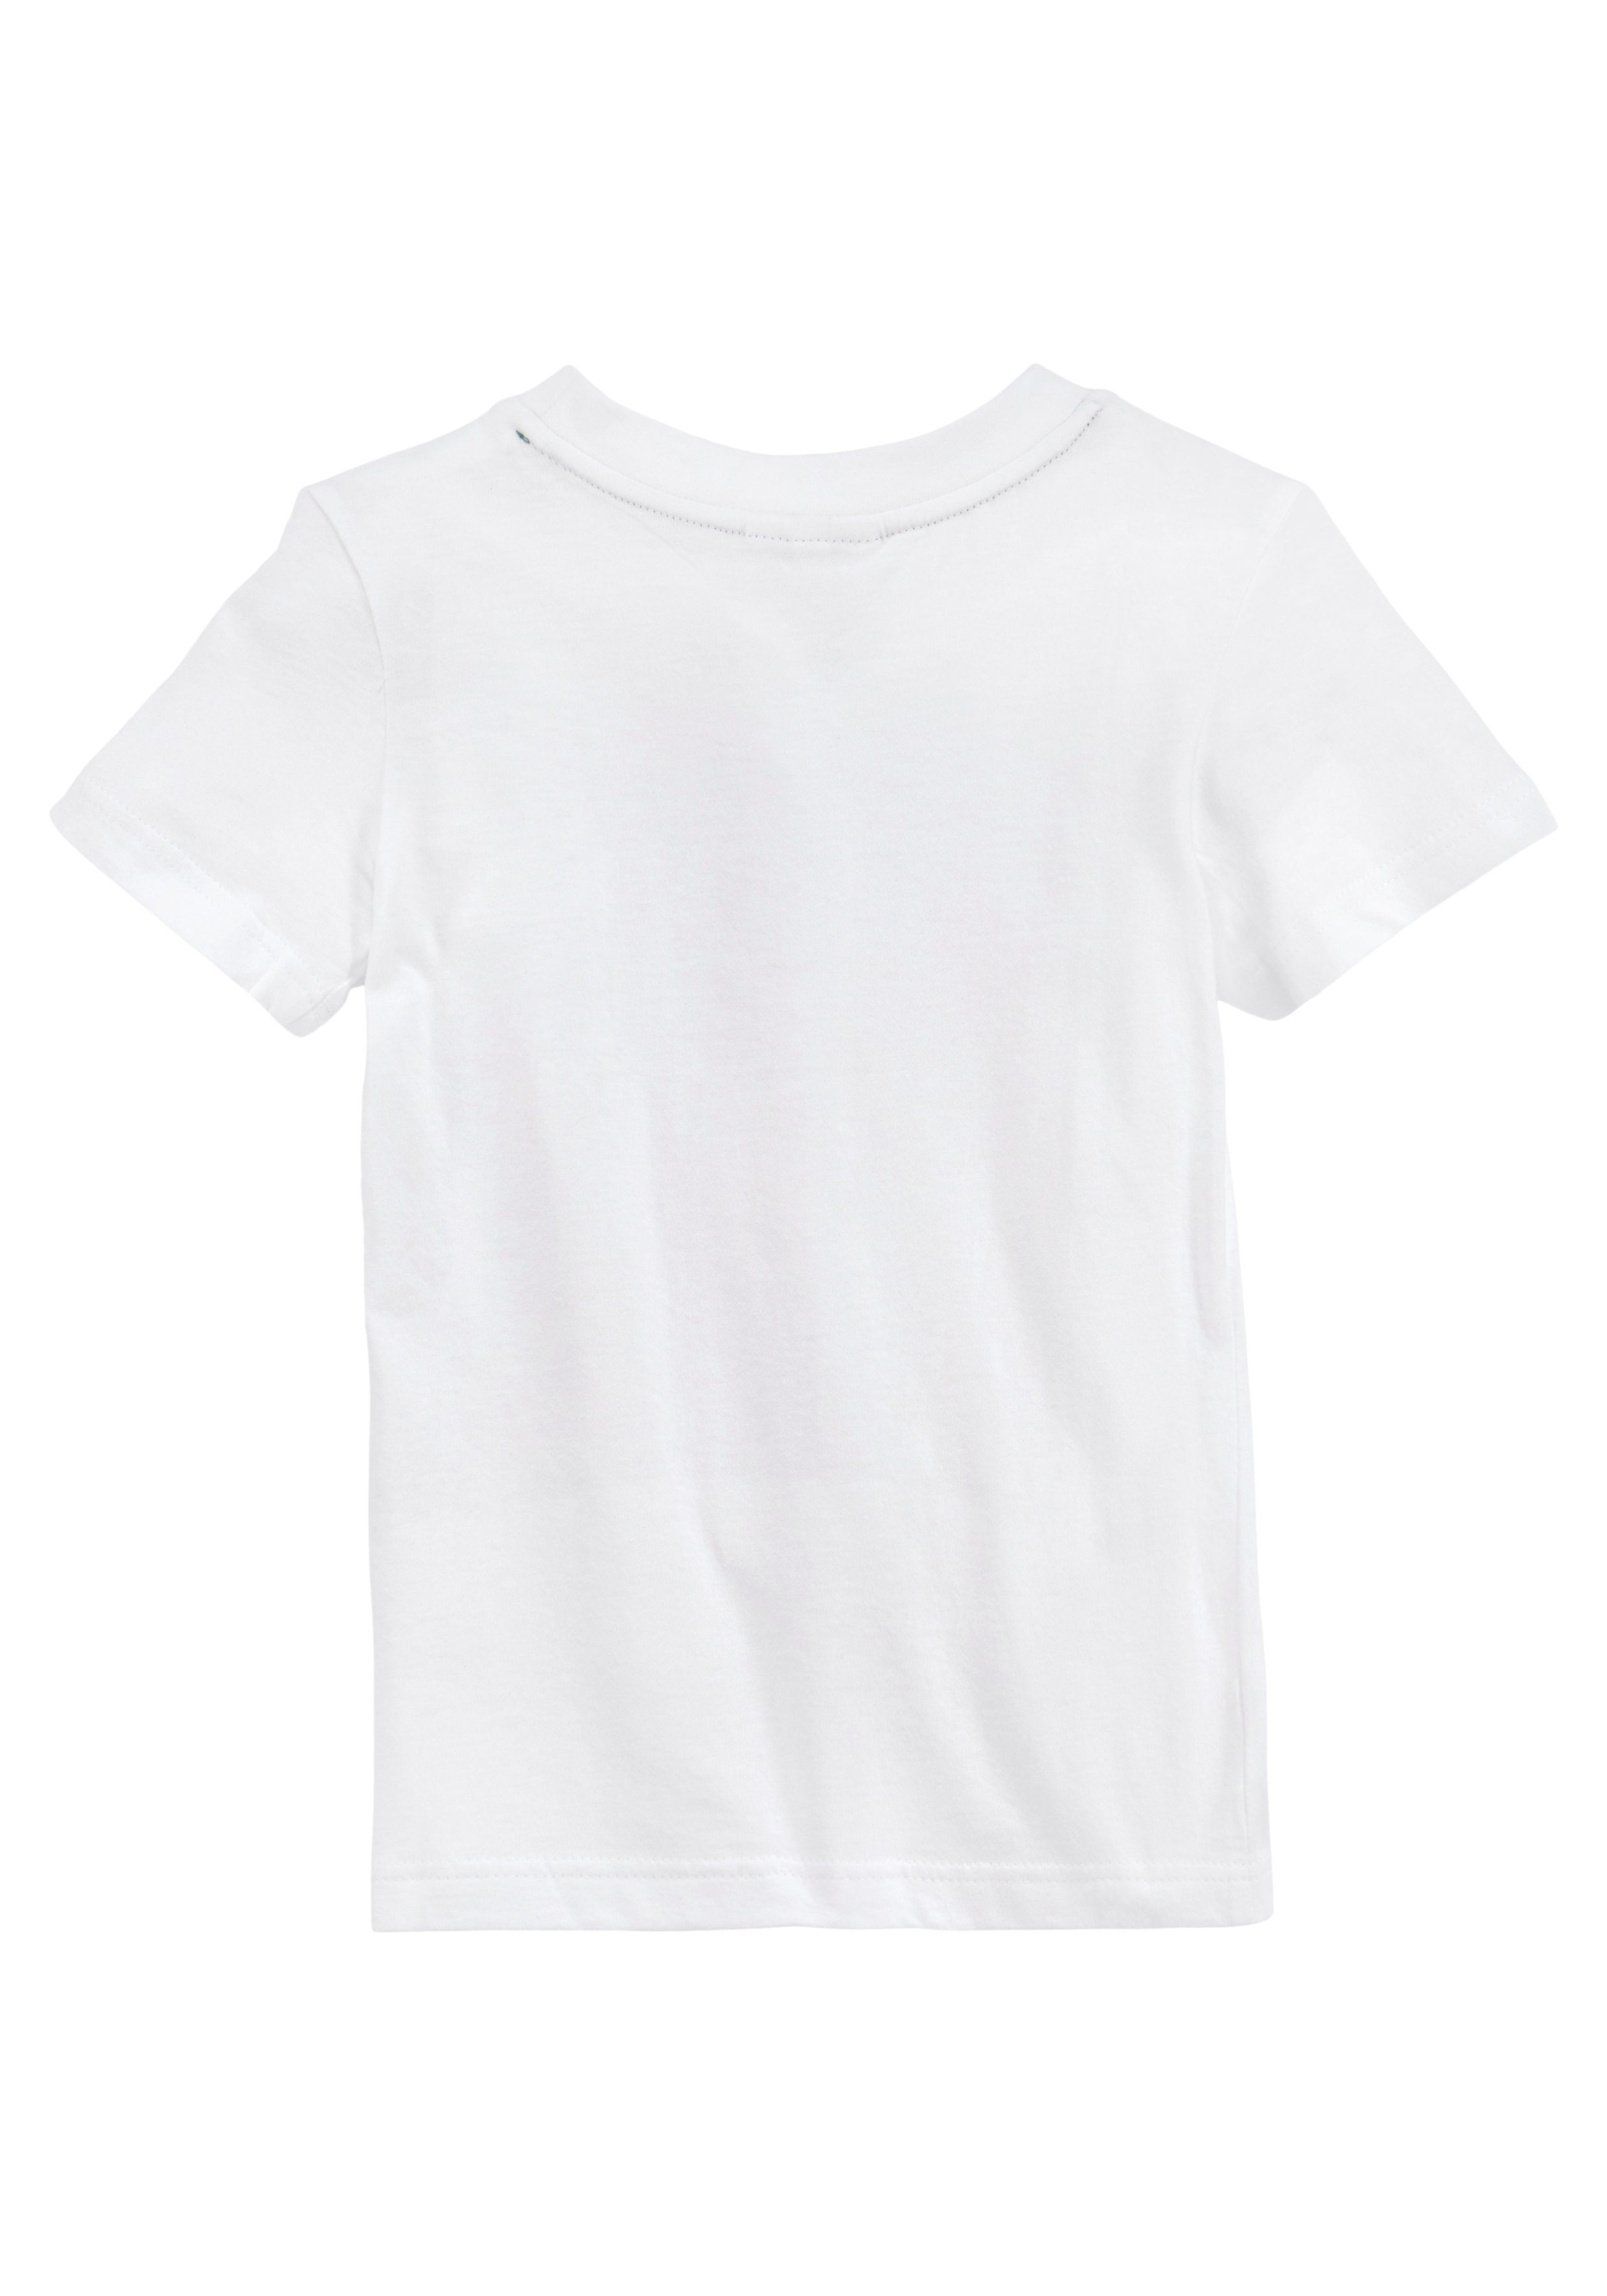 Lacoste-Krokodil auf Lacoste Brusthöhe mit WHITE T-Shirt